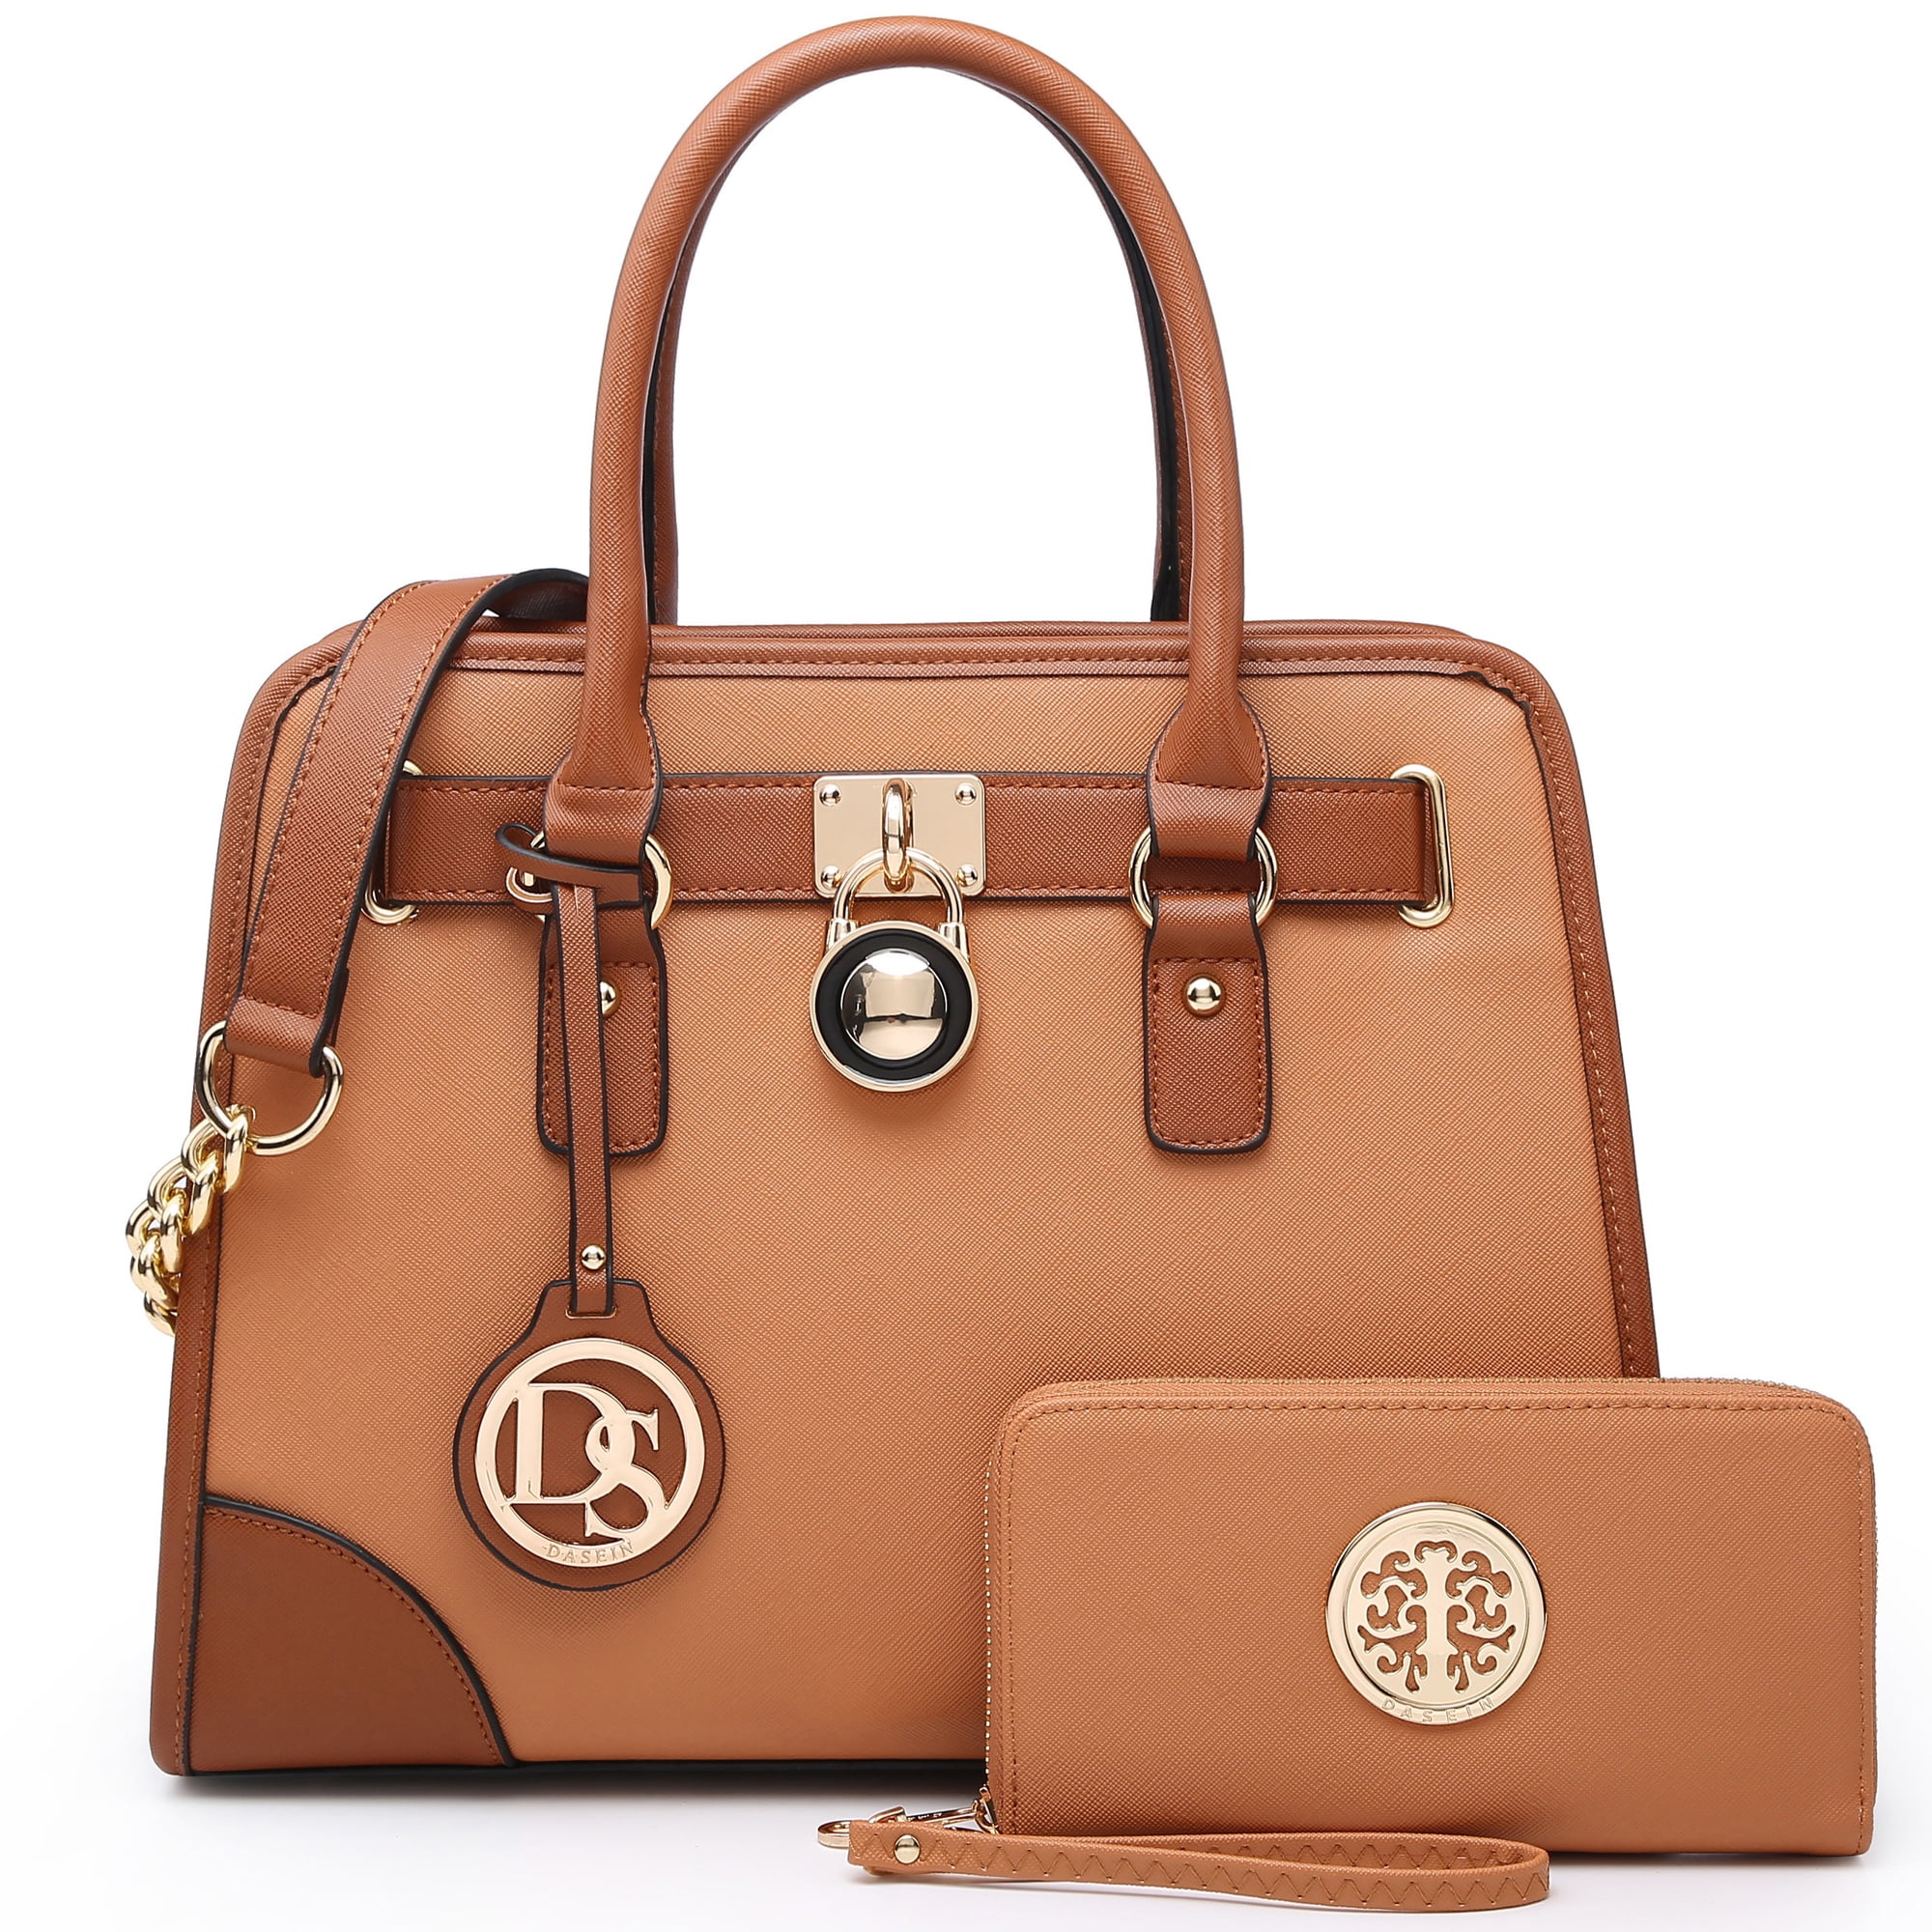 Handbags for Women PU Leather Shoulder Bags Fashion Hobo Bags Large Purse Set 2pcs